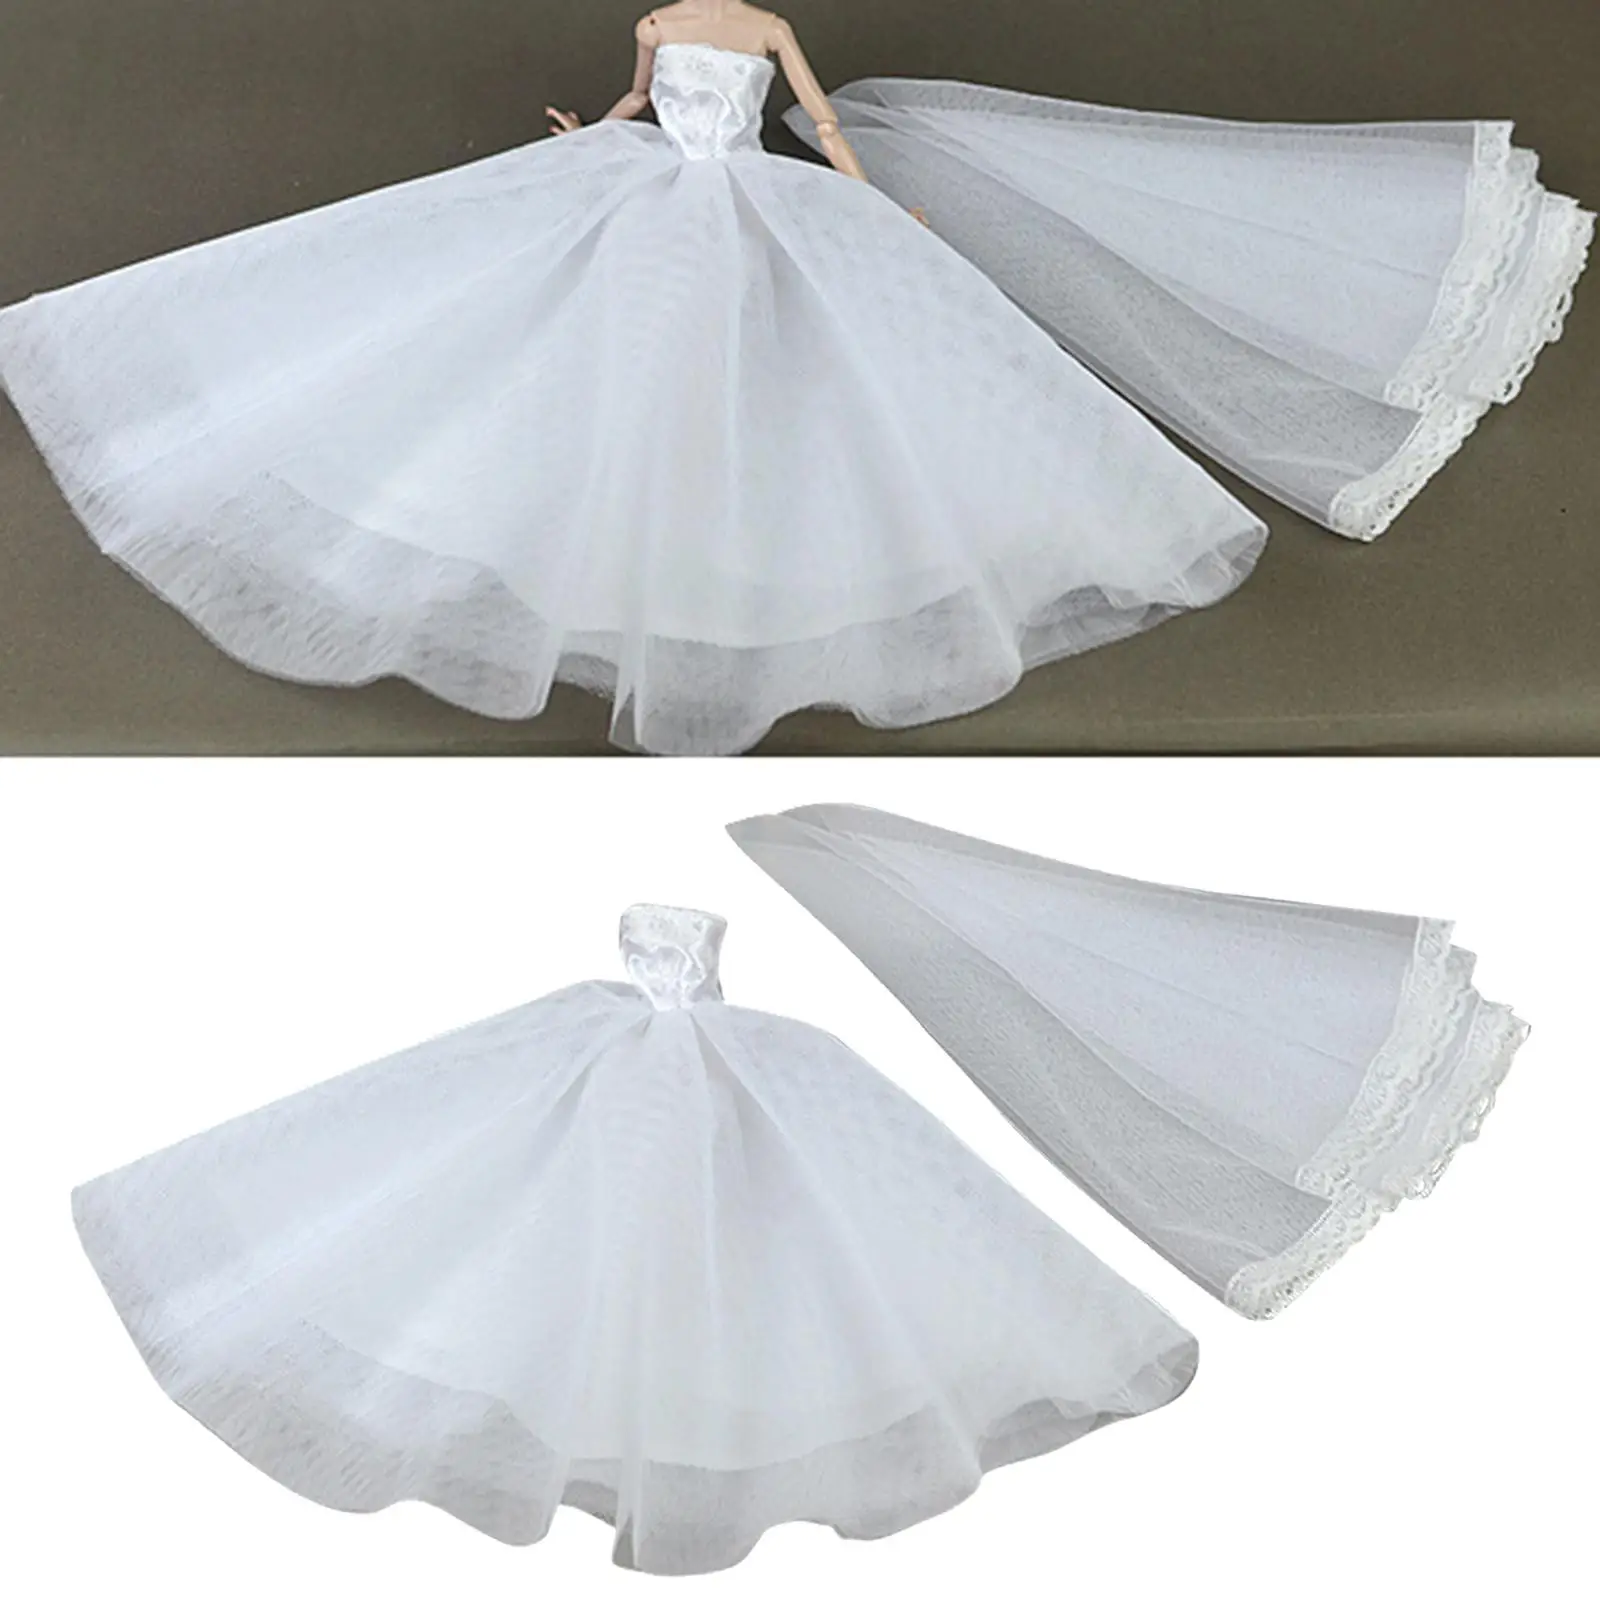 Fashion 1:6 Doll Girl Wedding Dress Clothing Kit for 12inch Dolls Dress